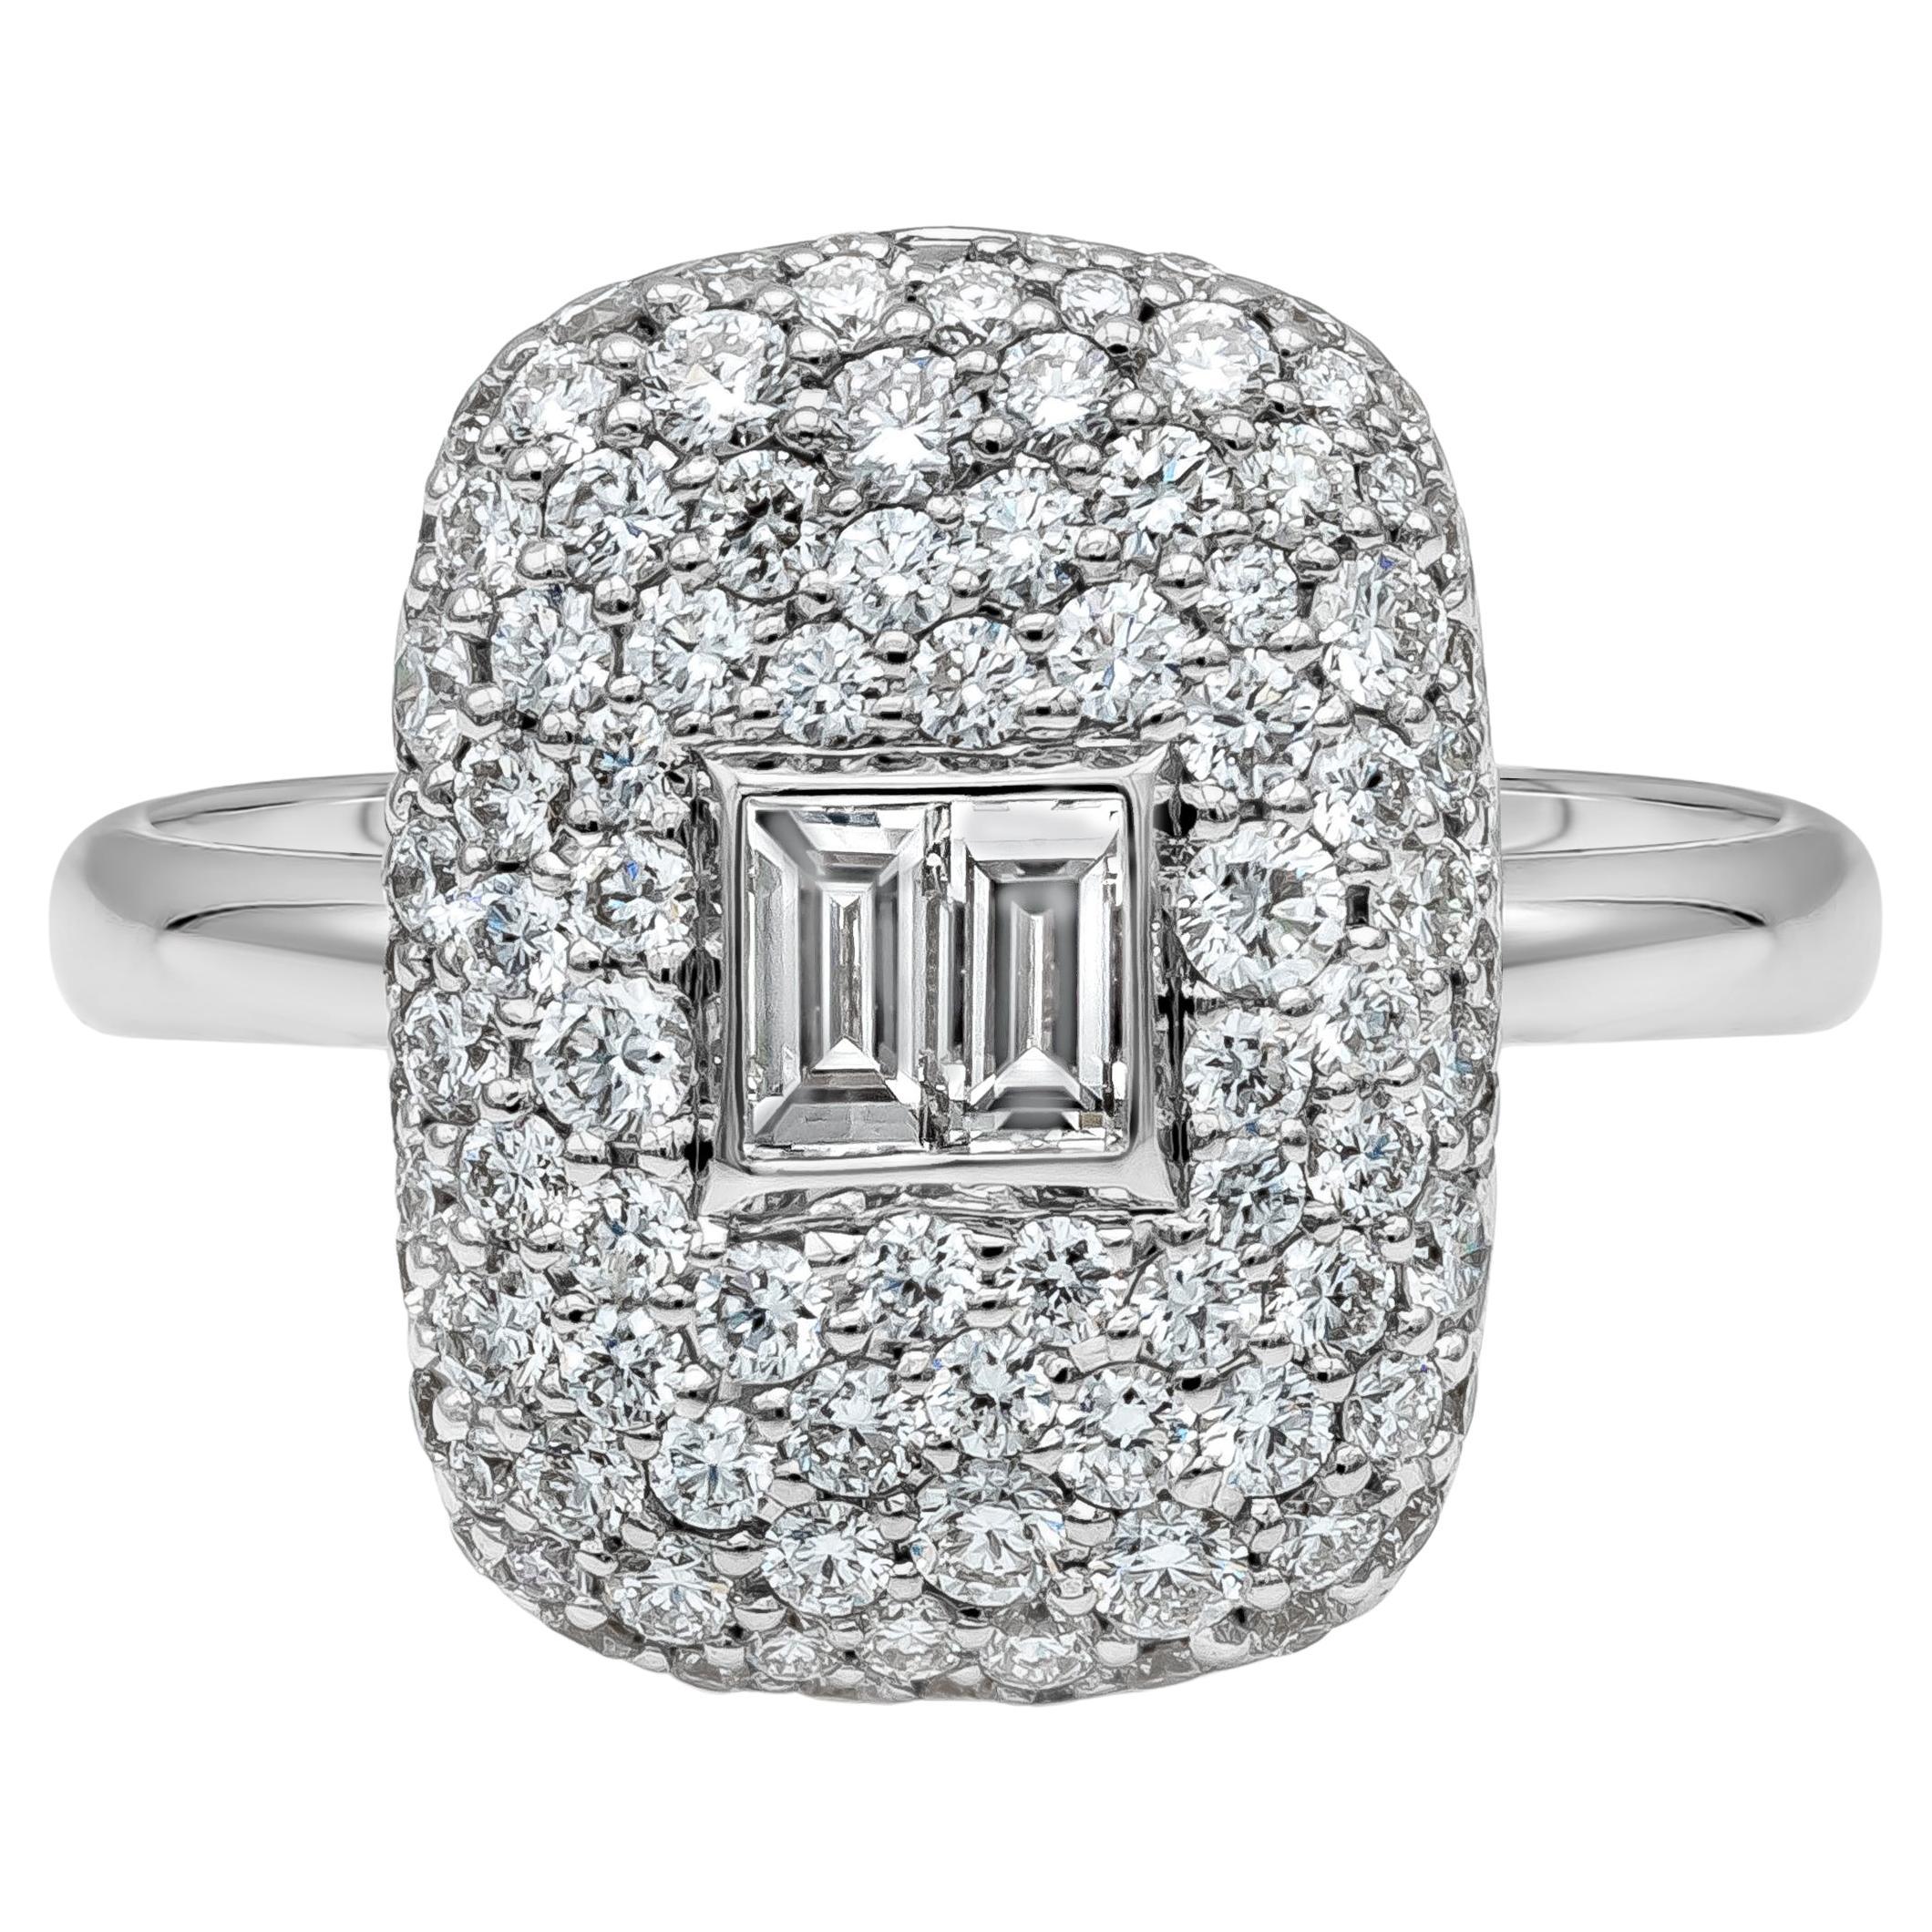 Roman Malakov 1.33 Carat Total Mixed Cut Diamond Fashion Ring For Sale